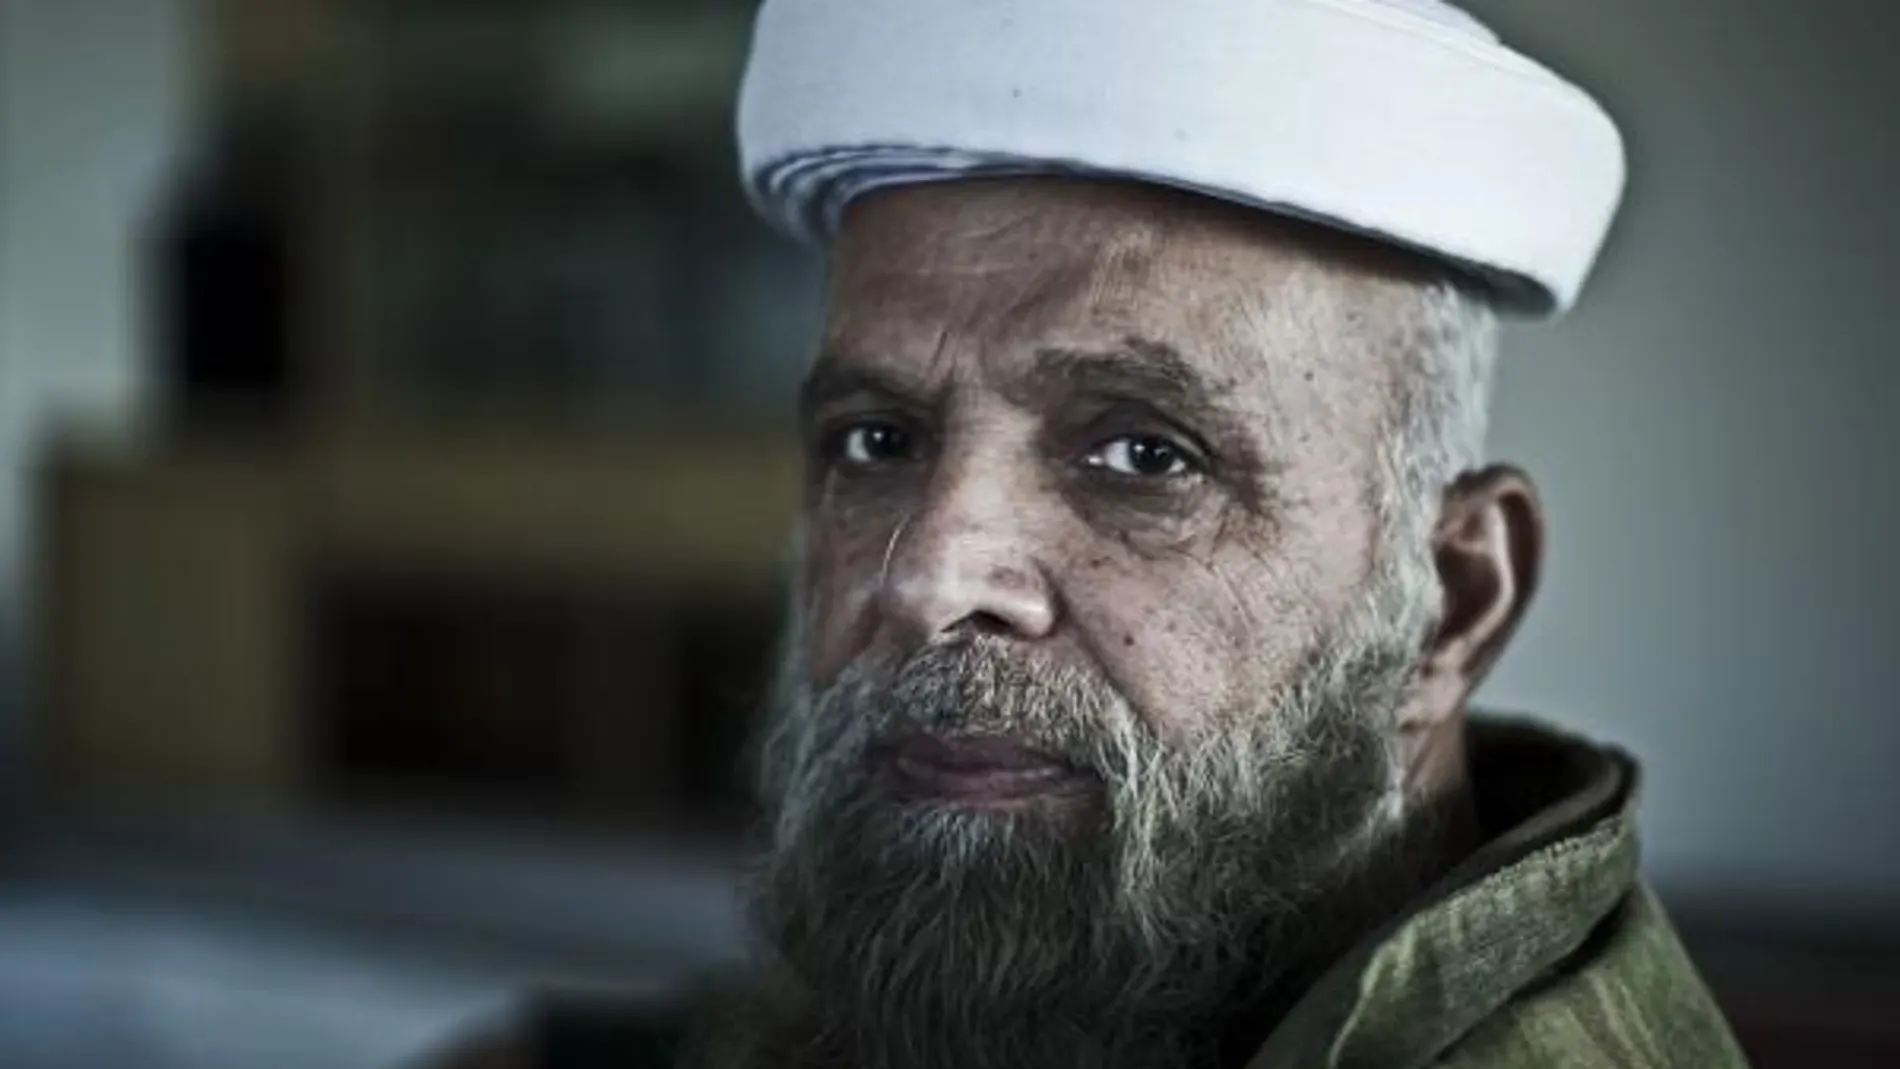 El mulá Omar, lider espiritual de los talibán